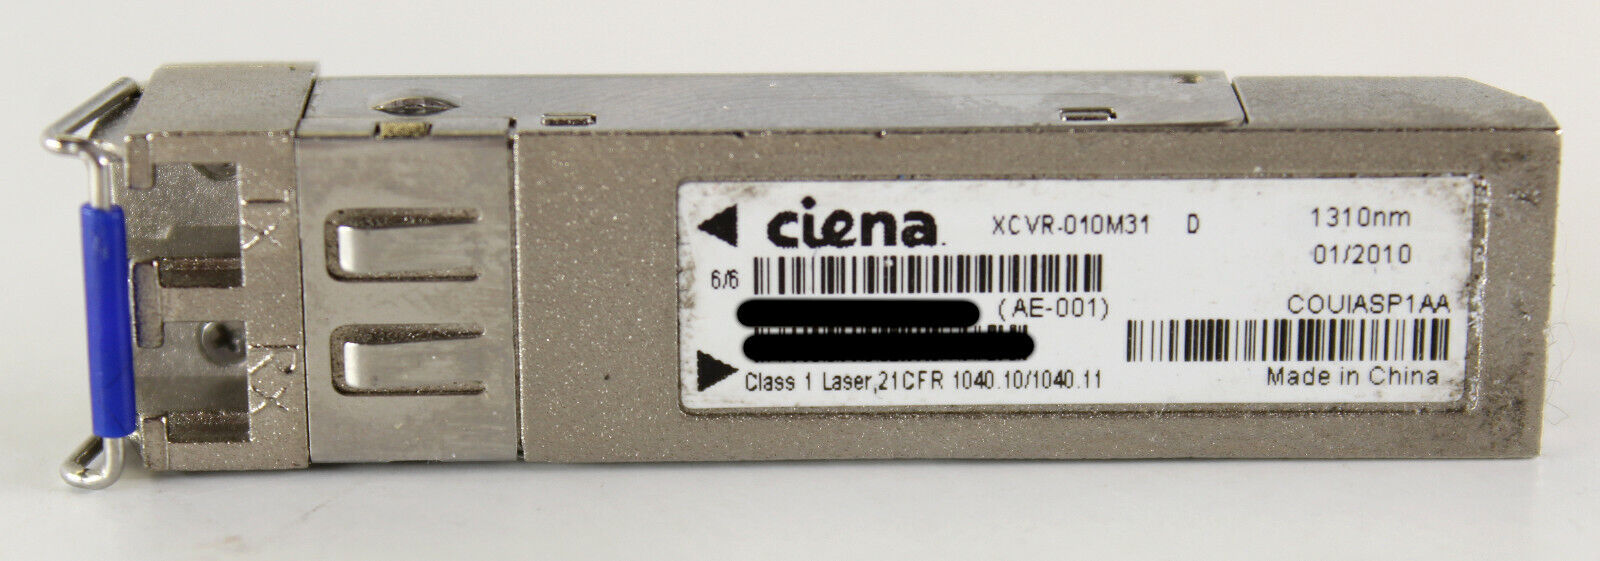 Ciena XCVR-010M31 D 1310nm 1G COUIASP1AA SFP Transceiver Module